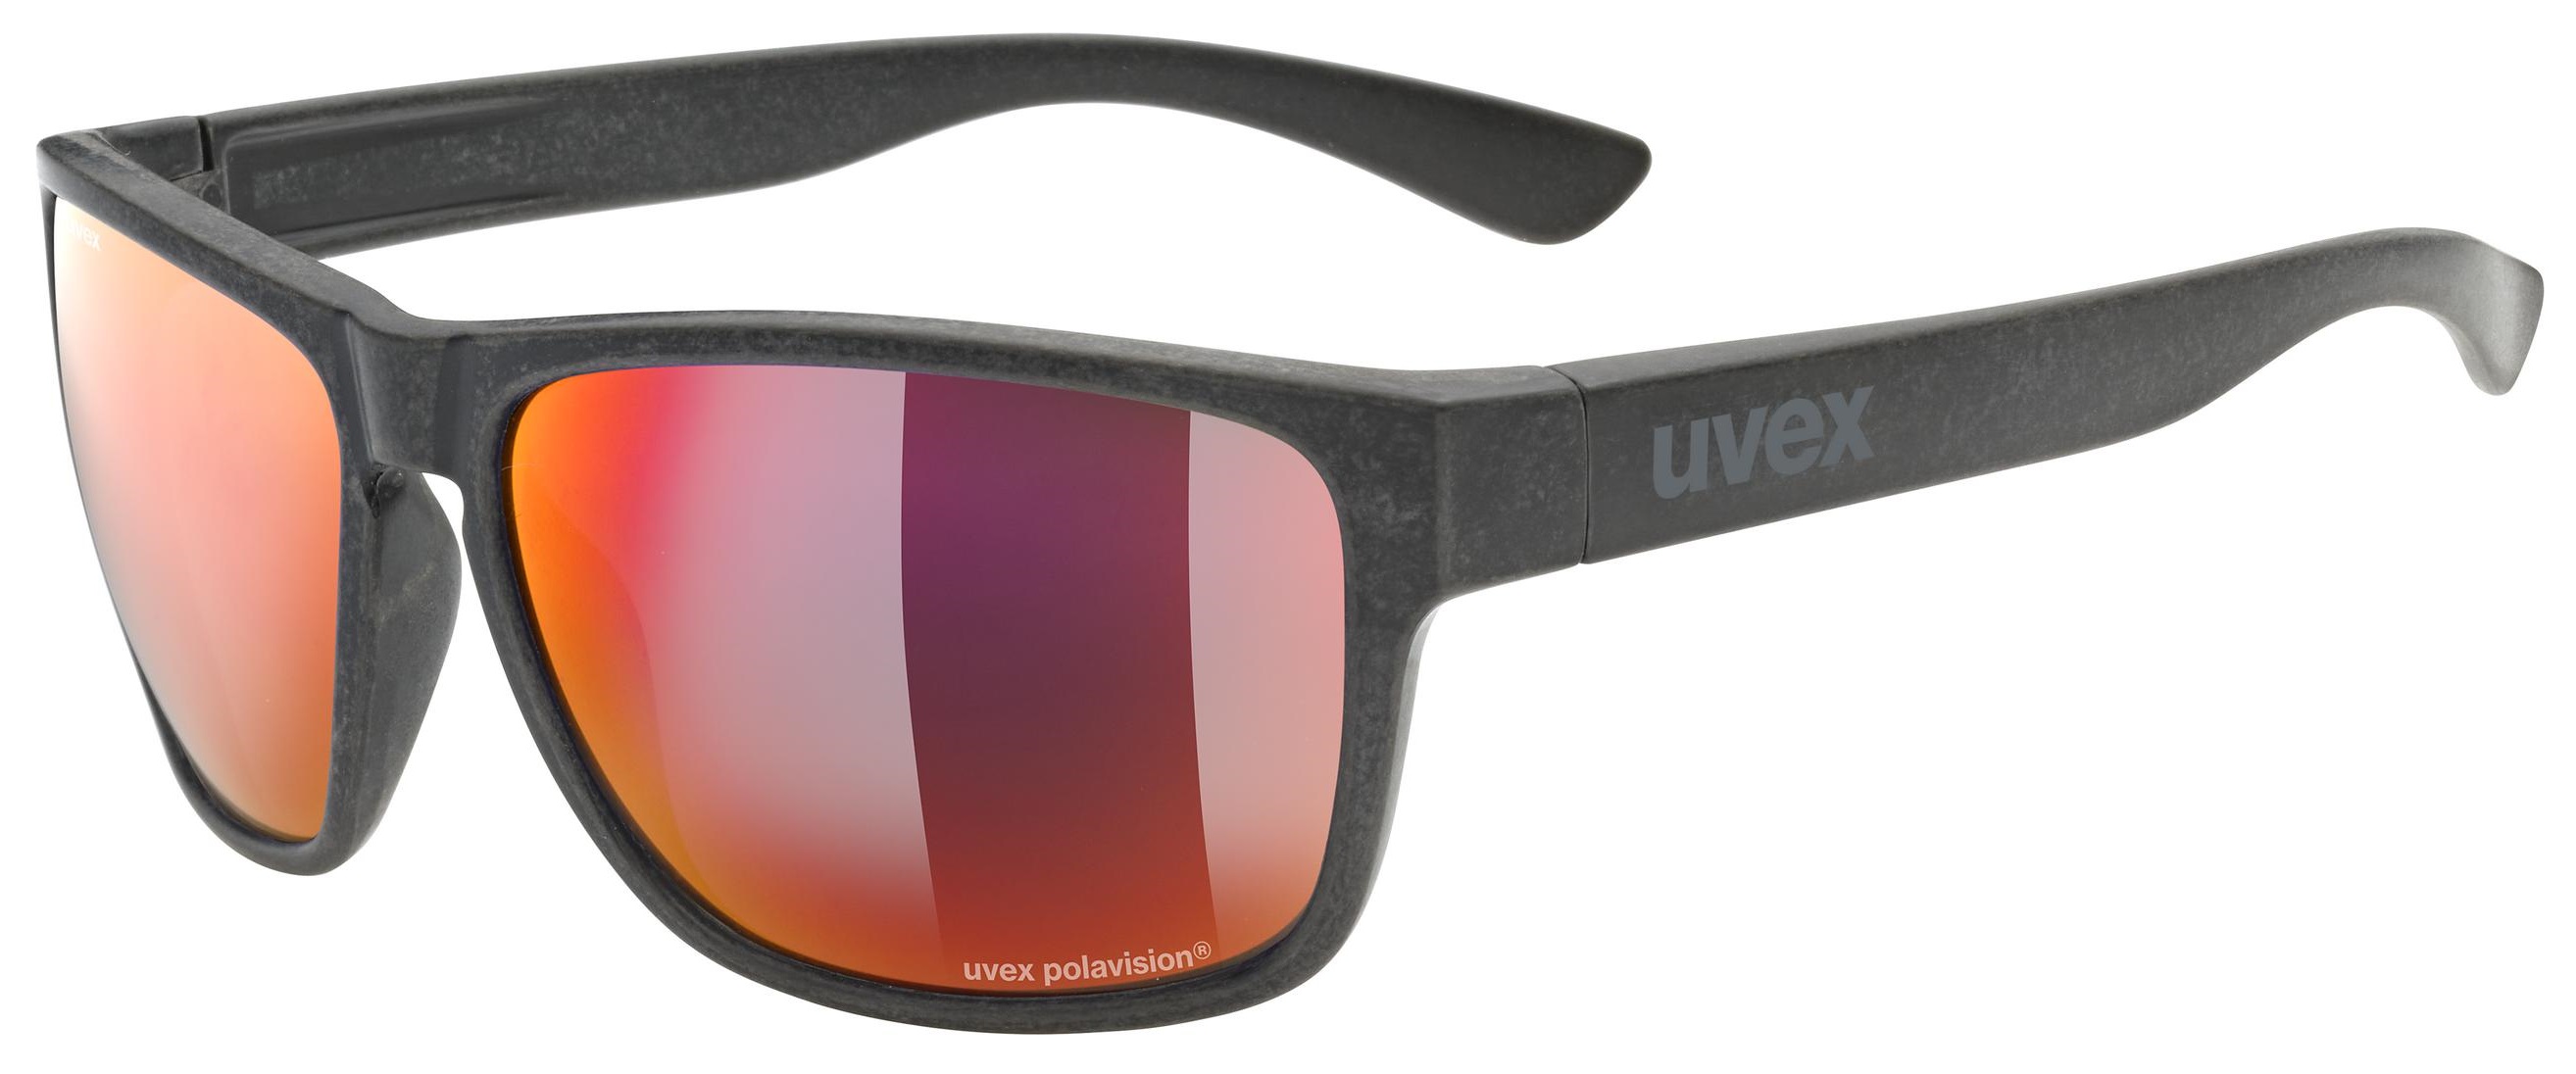 UVEX LGL OCEAN POLAVISION Sonnenbrille Radbrille Sportbrille